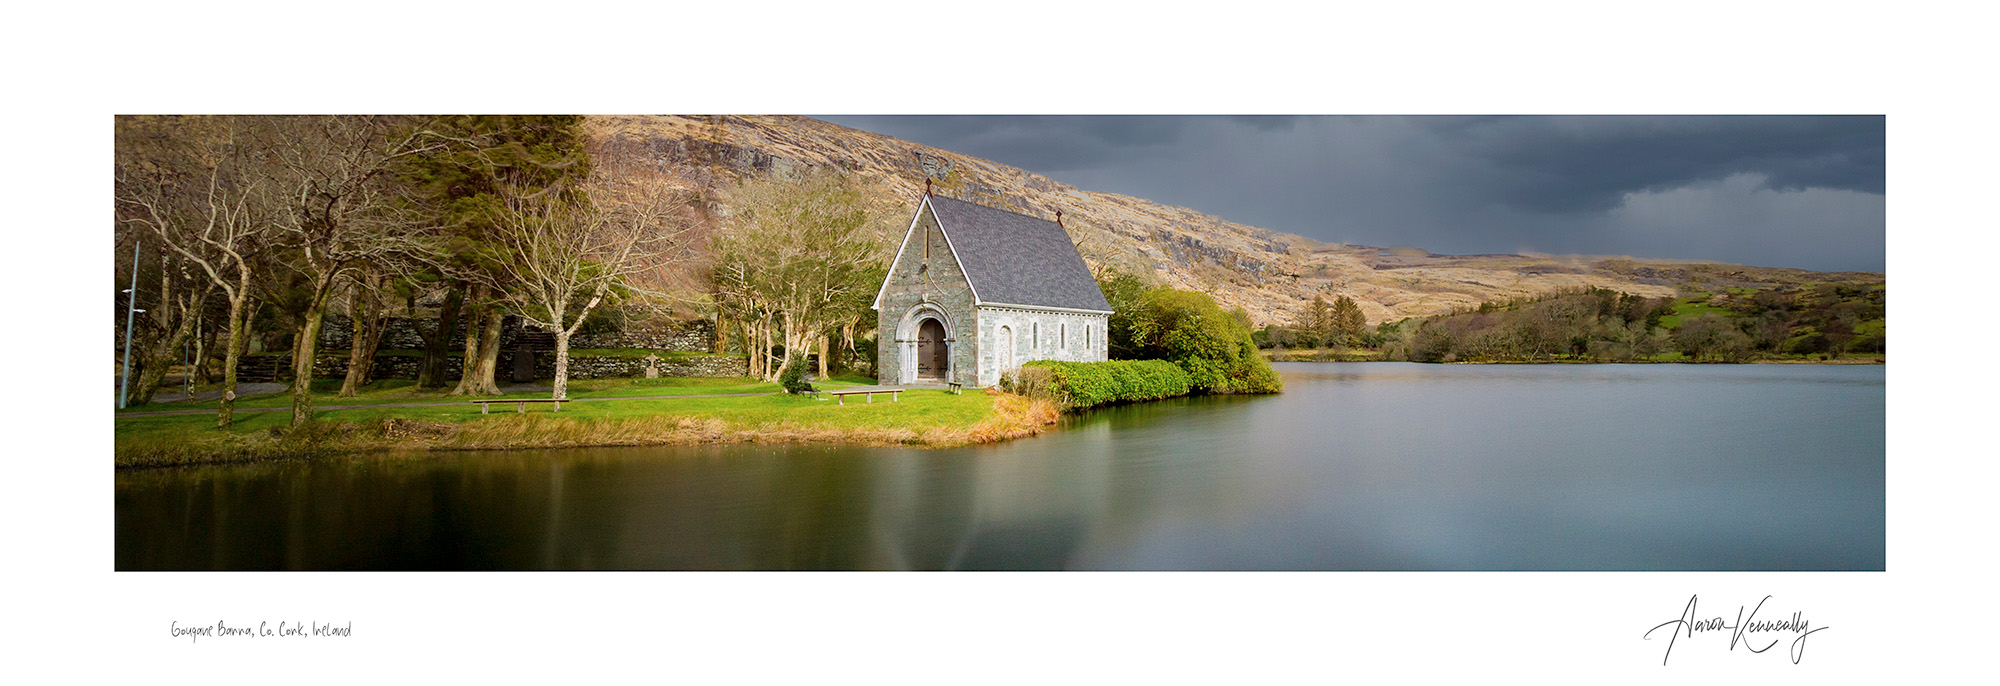 St Finbarr's Oratory, Gougane Barra, Co. Cork, Ireland